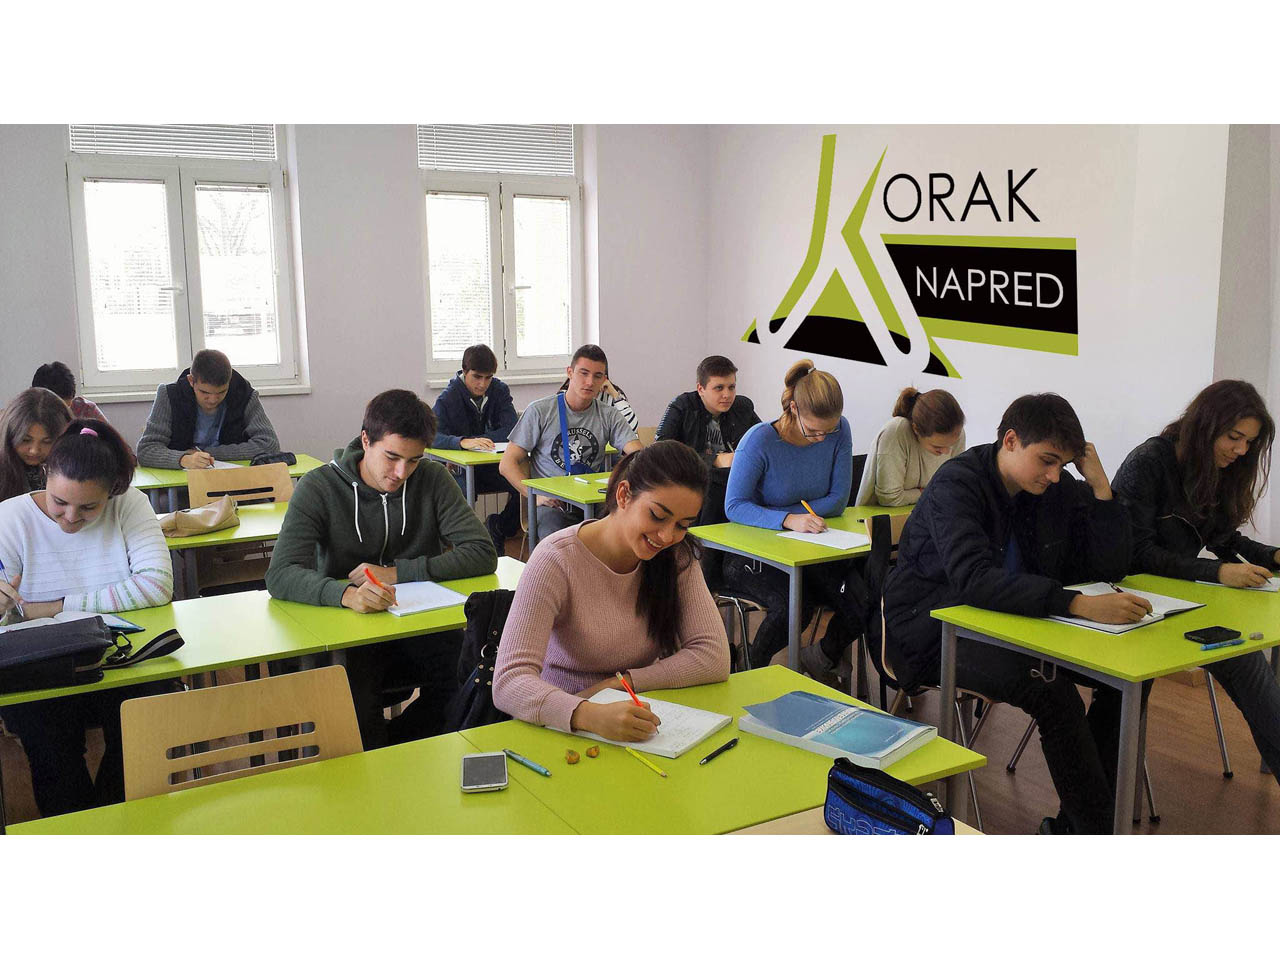 KORAK NAPRED EDUCATIVE CENTER Schools and high schools Beograd